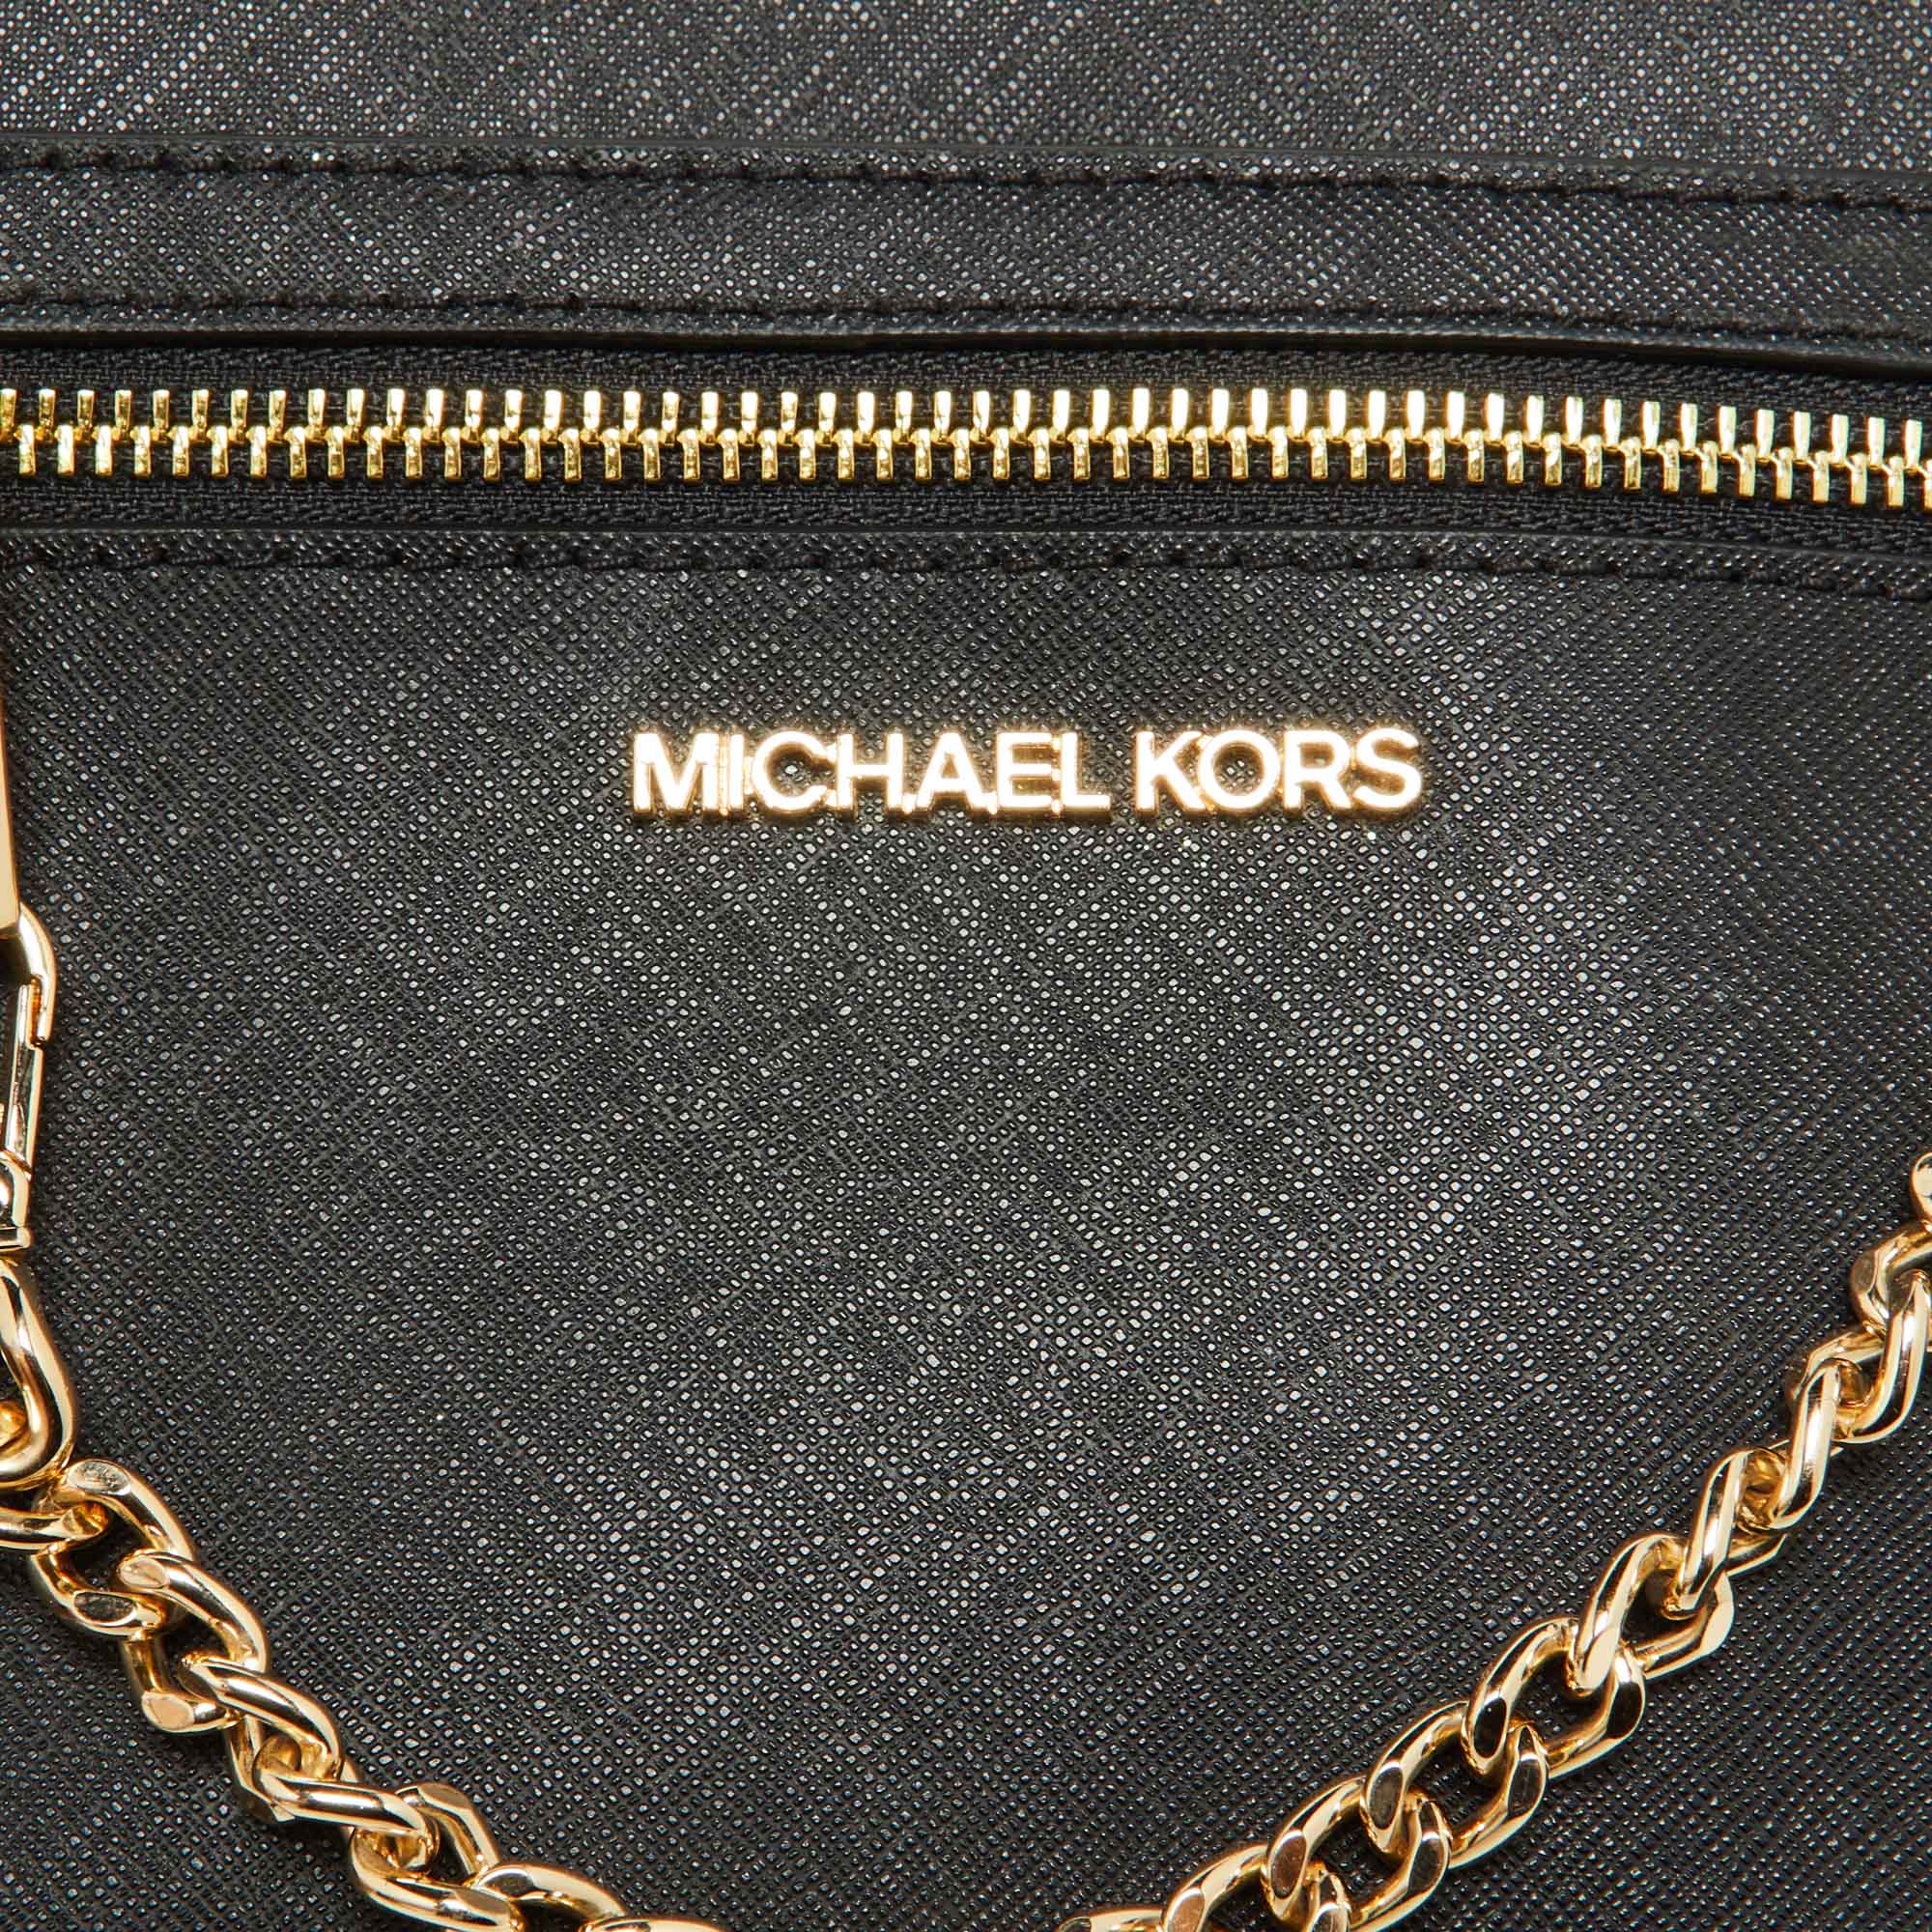 Michael Kors Black Jet Set Large Leather Chain Crossbody Bag at FORZIERI